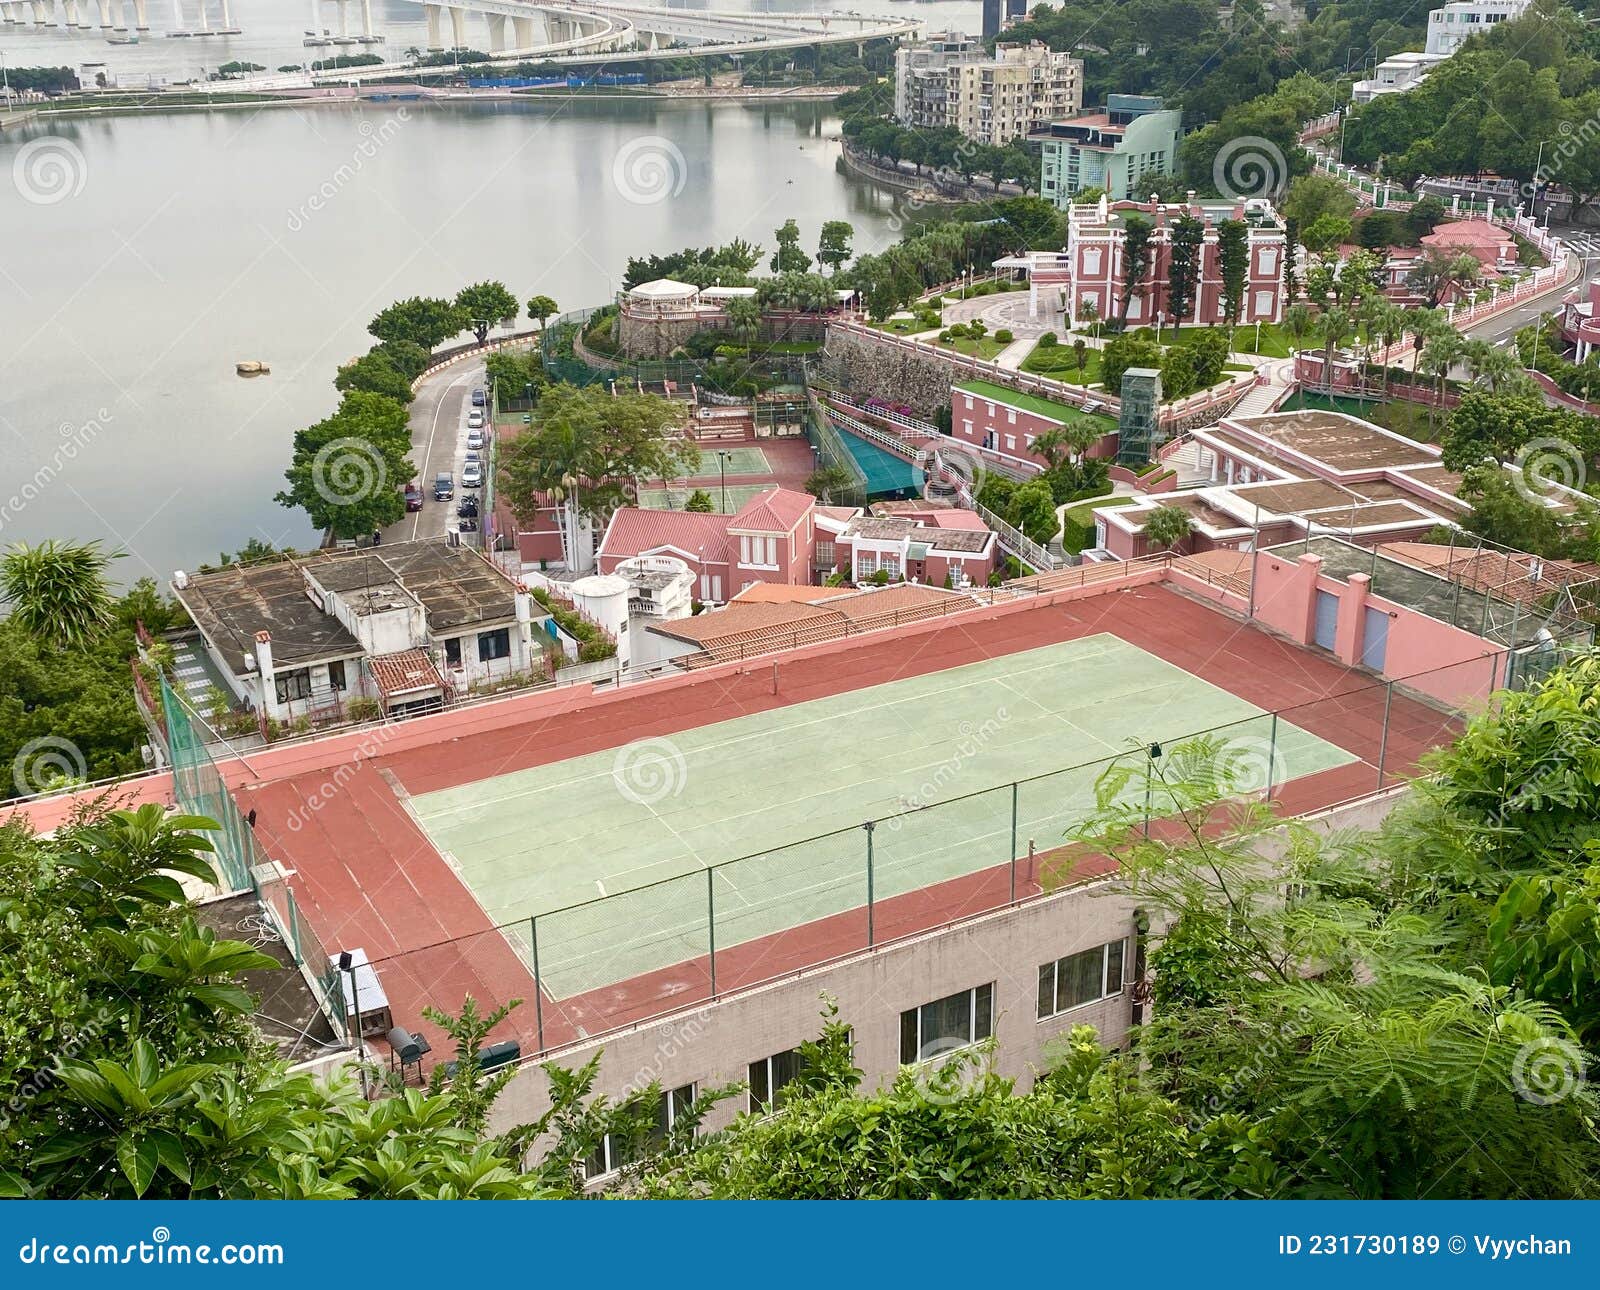 cluba militar de macau campos de tenis macao tennis club colonial macau heritage building sai van mansion colina da penha hill